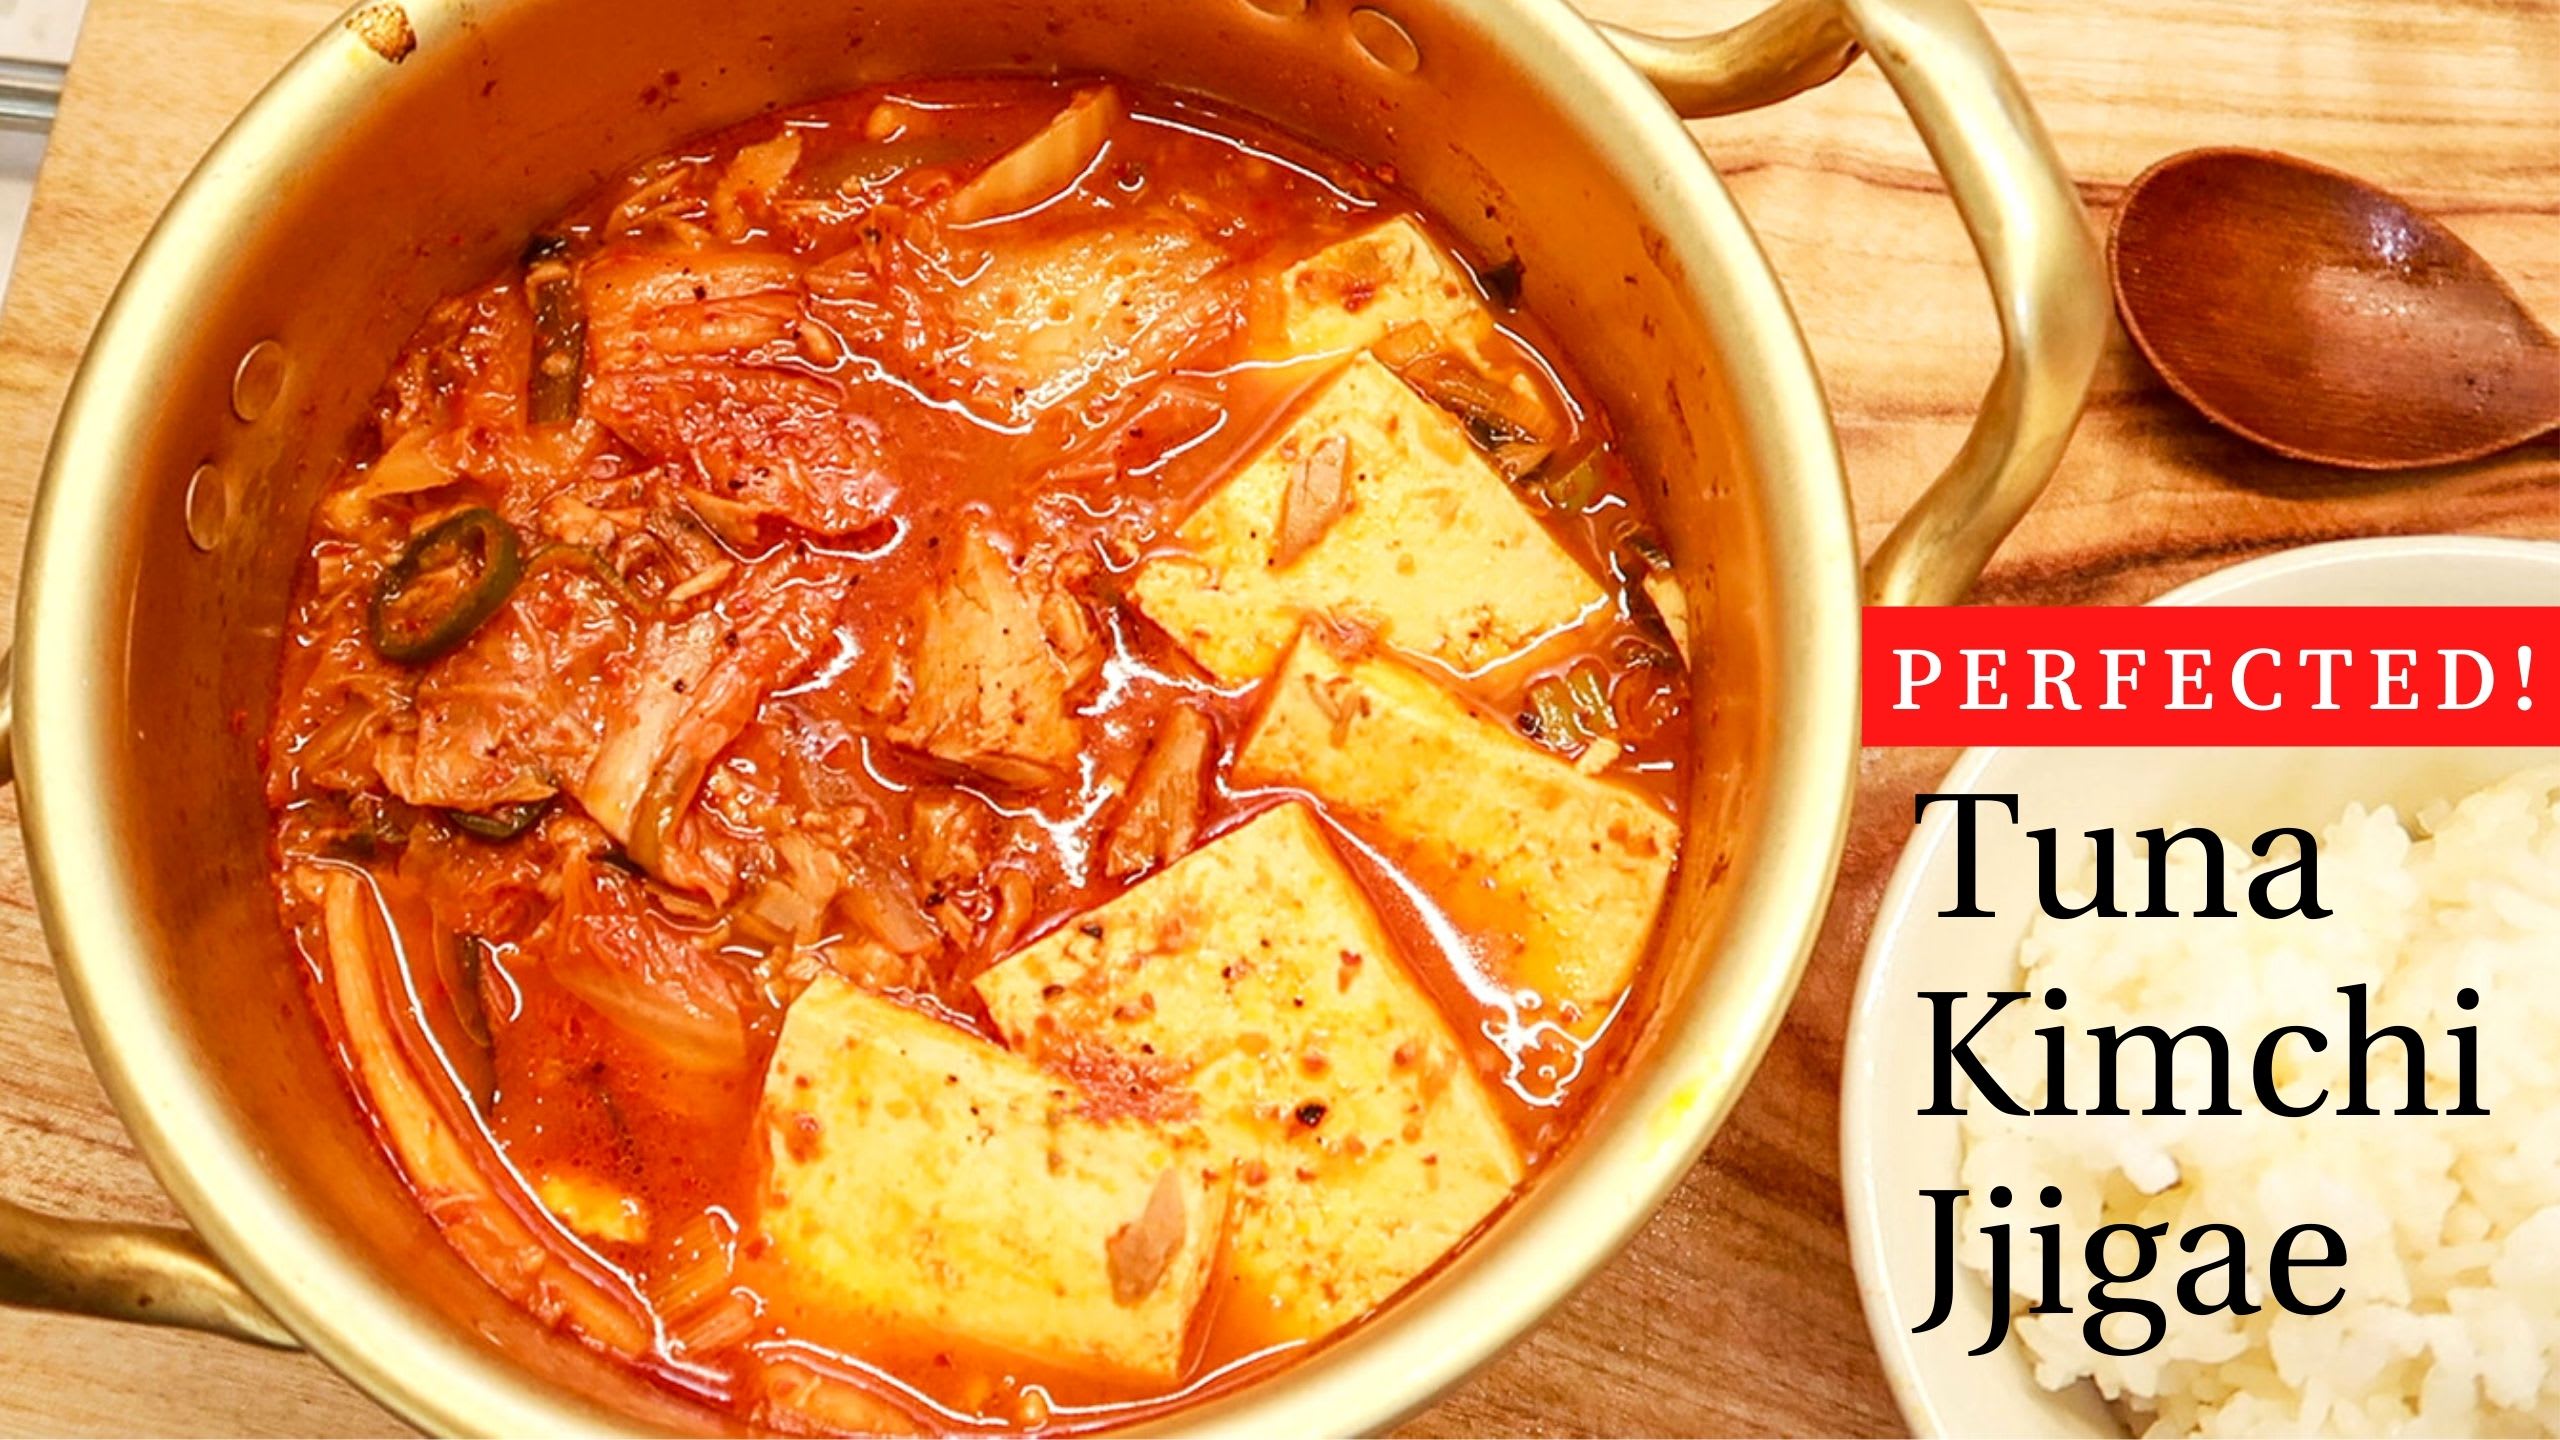 Kimchi Jjigae (Kimchi Stew) • Just One Cookbook